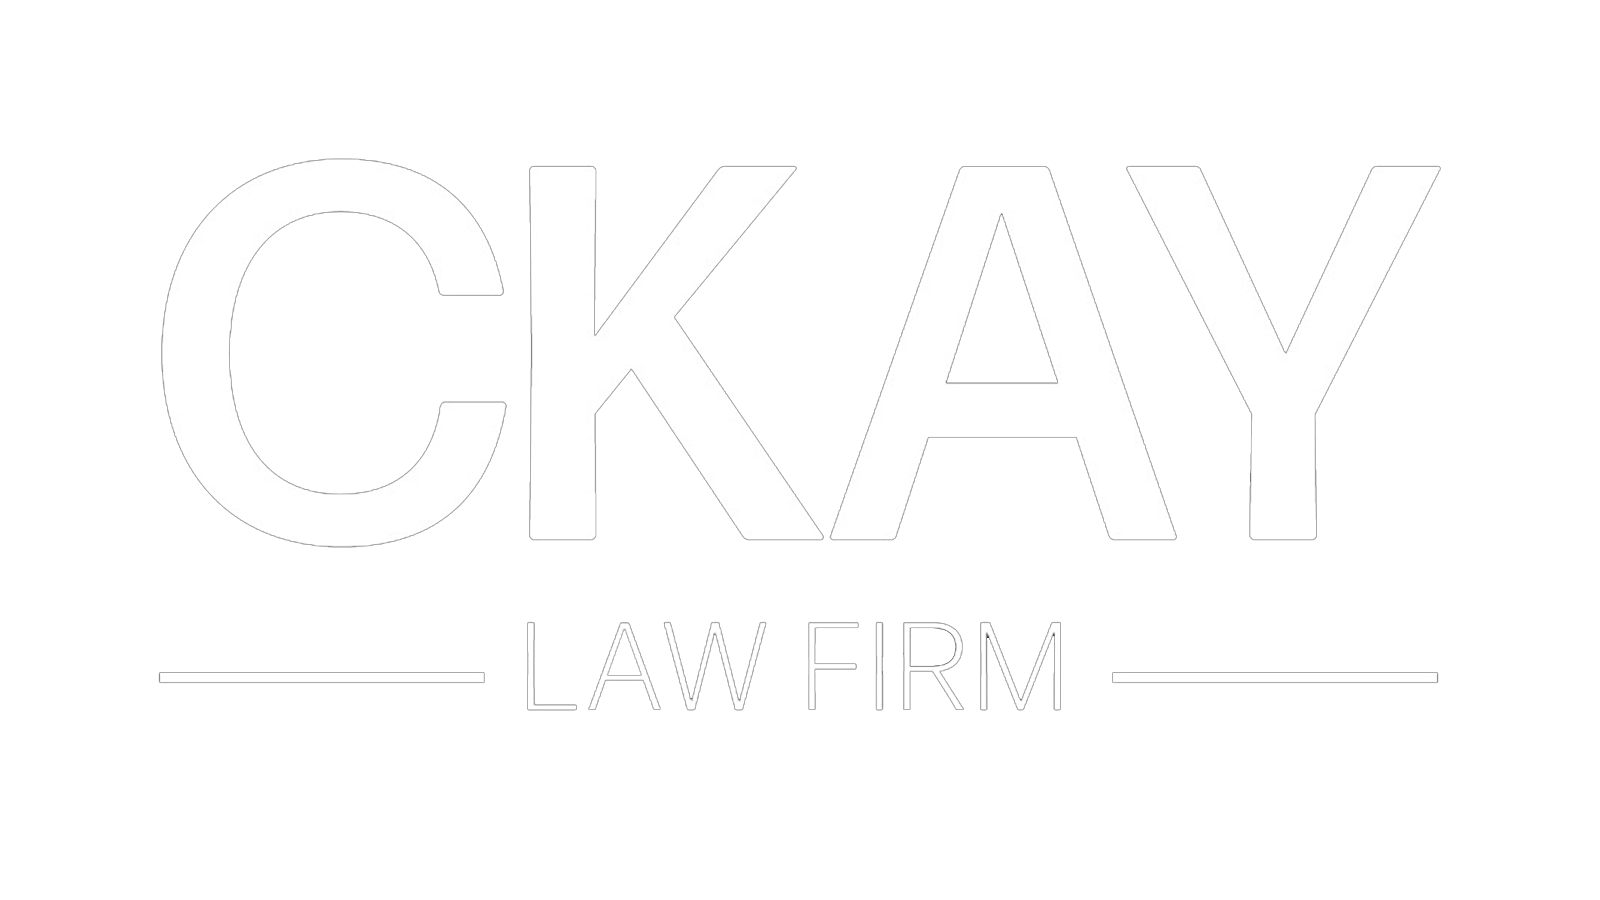 CKAY Law Firm